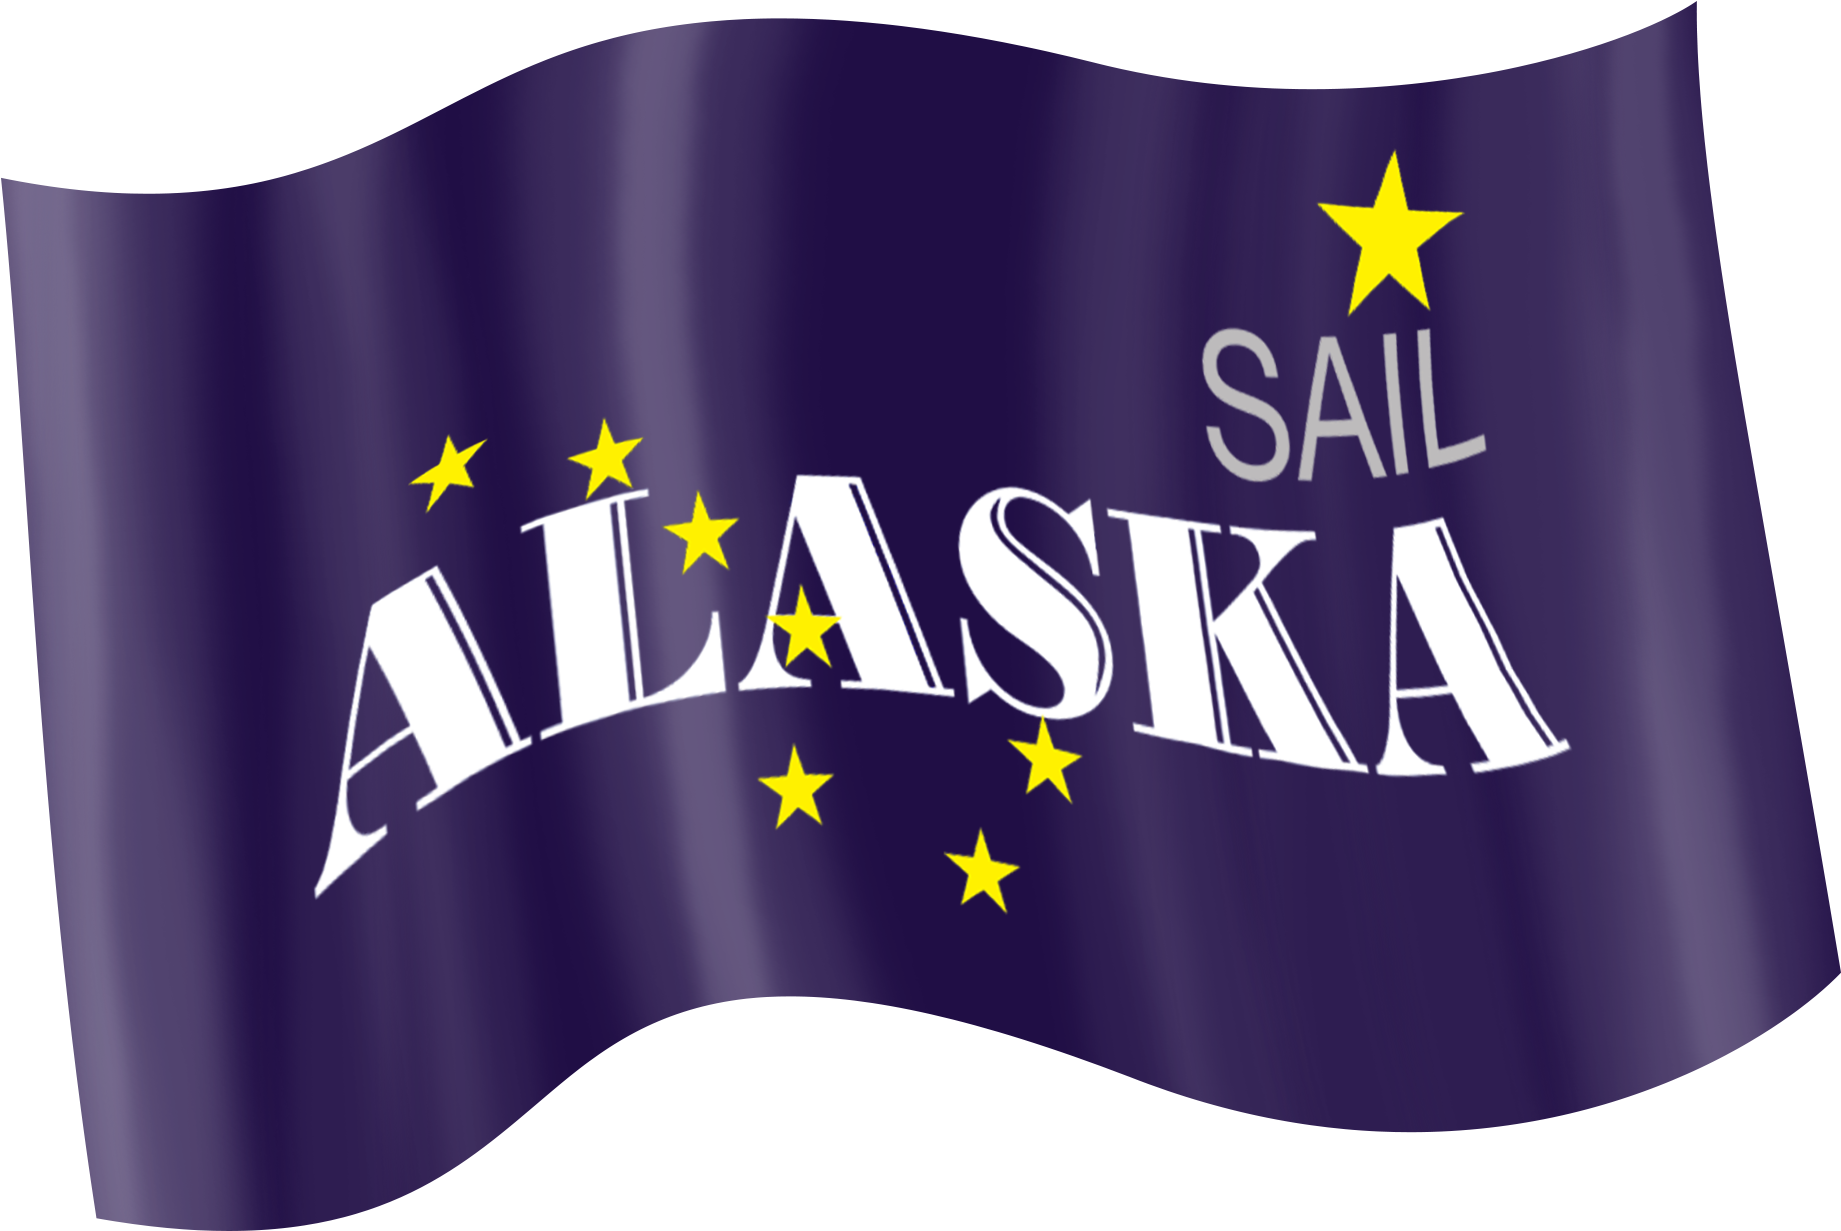 Sail Alaska Promotional Flag